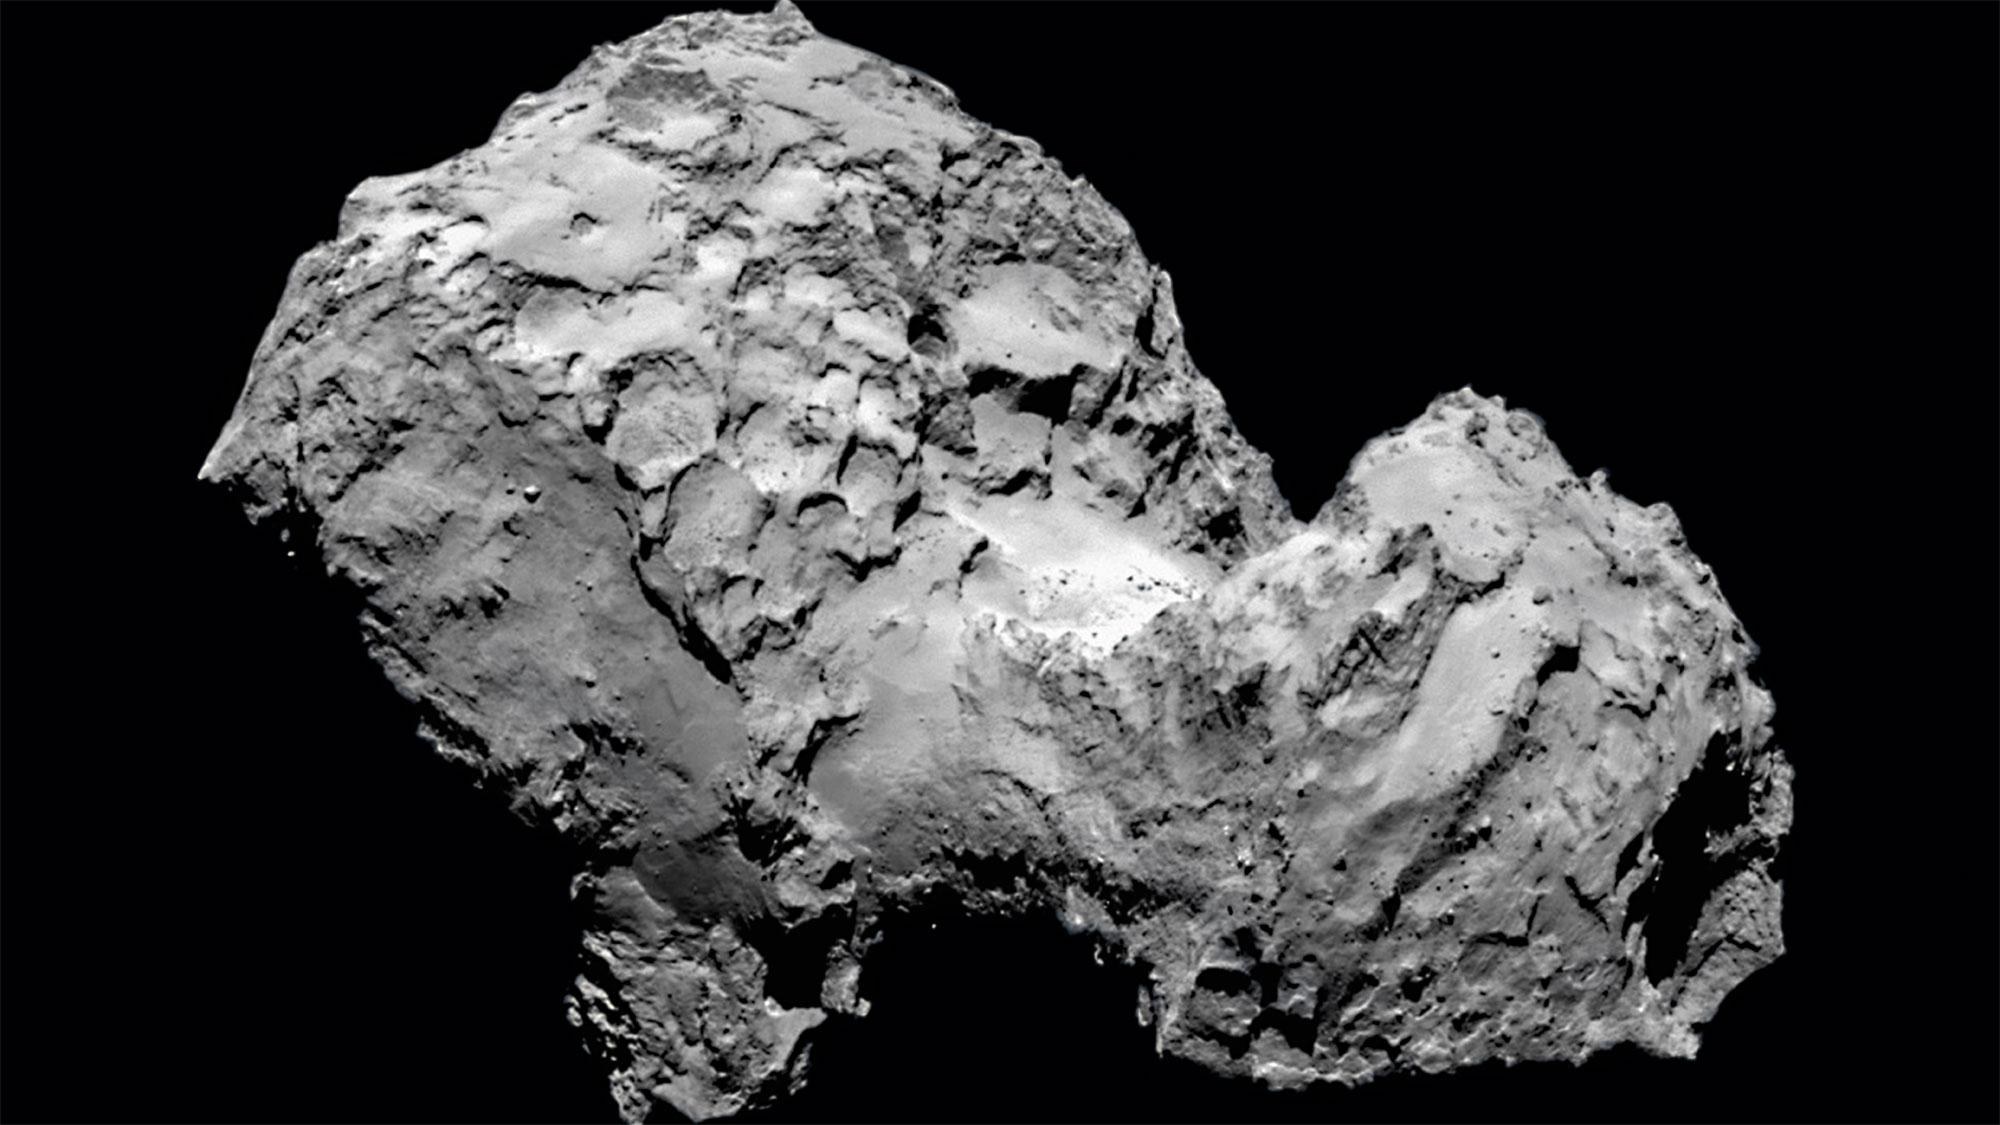 We're there! Rosetta entered orbit around 67P/ChuryumovGerasimenko on 4 August 2014